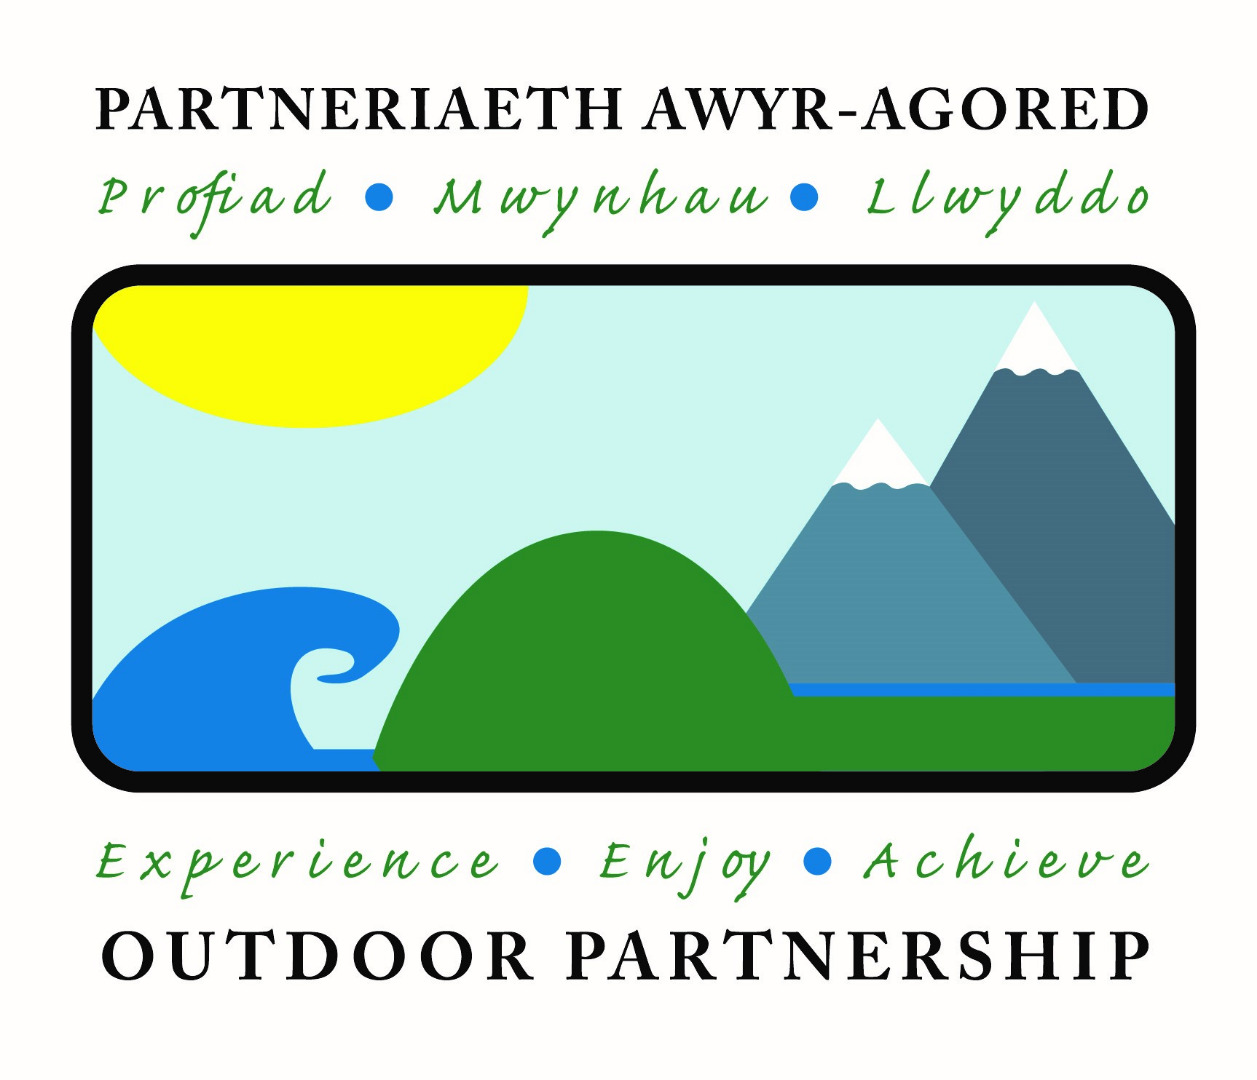 Outdoor partnership